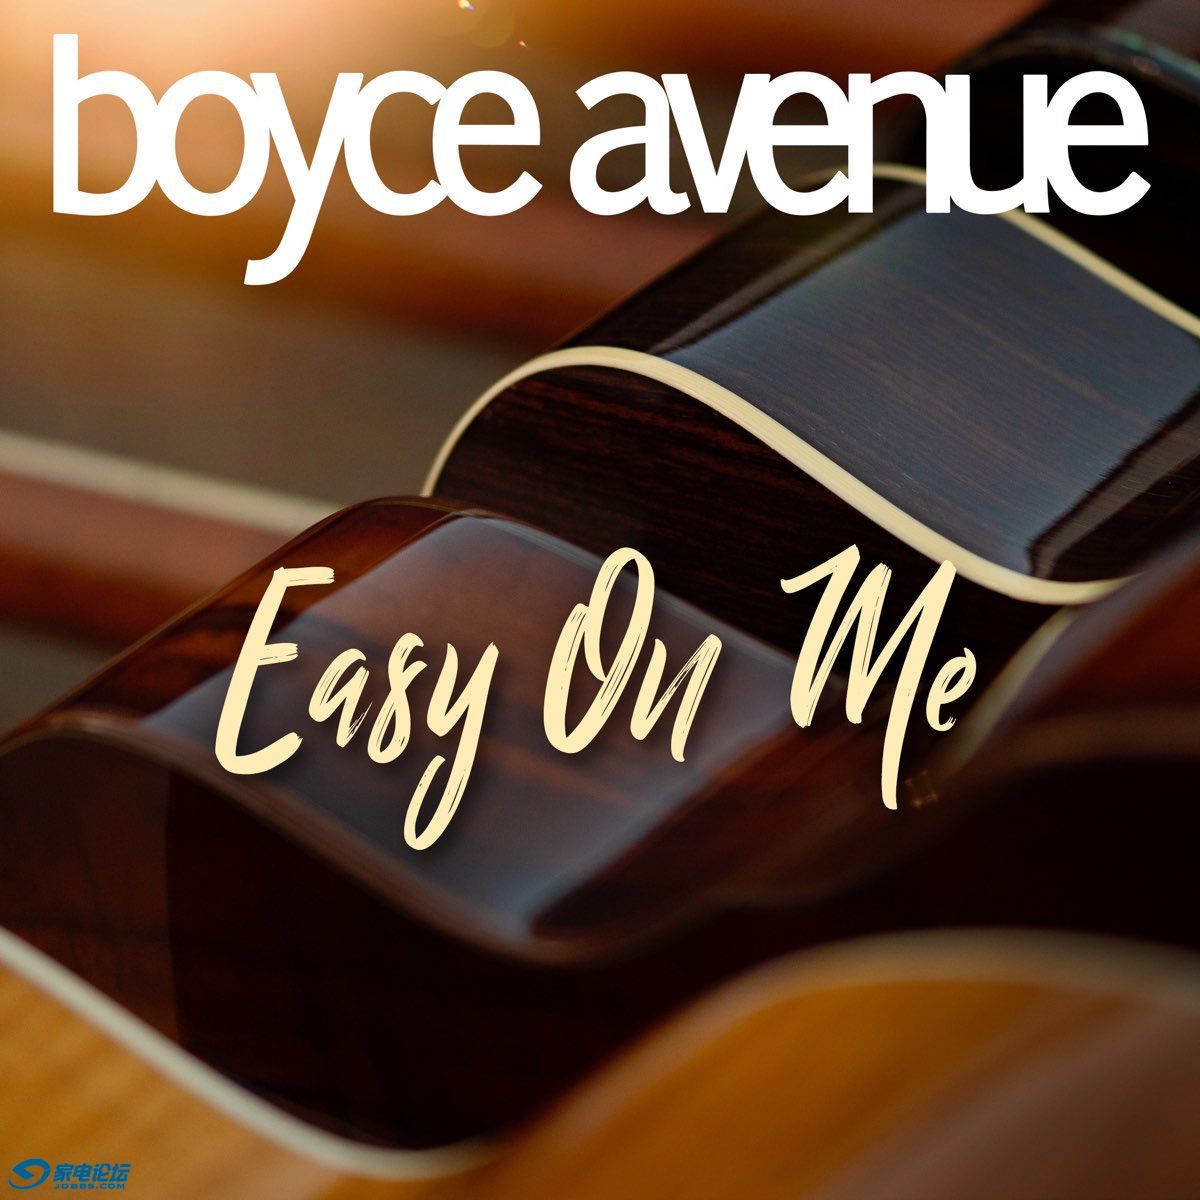 boyce-avenue-easy-on-me.jpg